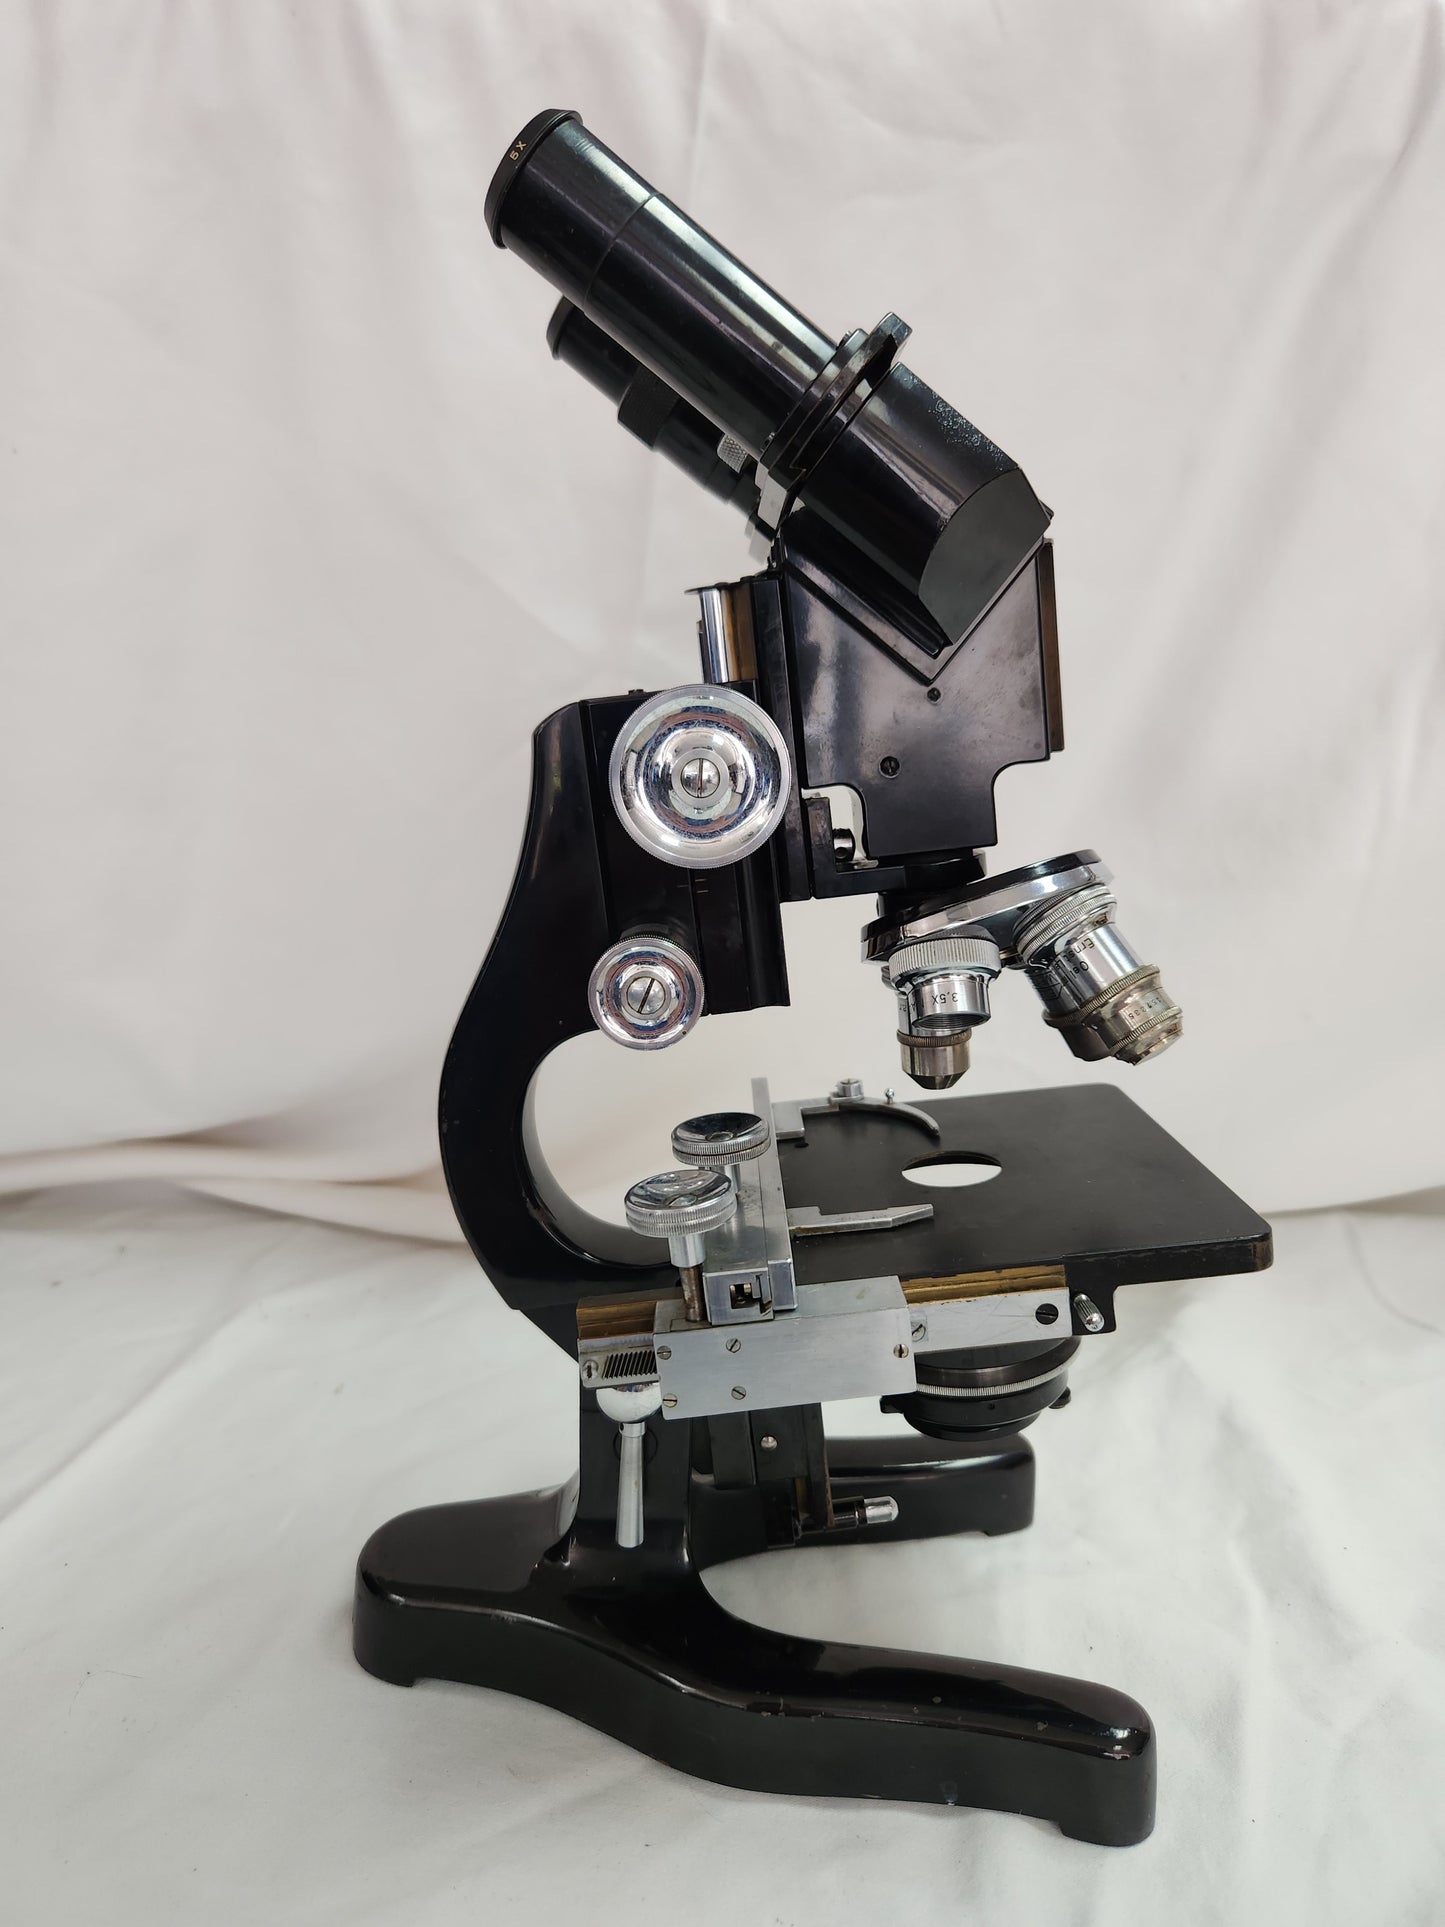 VTG - 1930's Ernst Leitz Binocular Compound Microscope W/4 Objectives & Hard Case (PARTS ONLY)